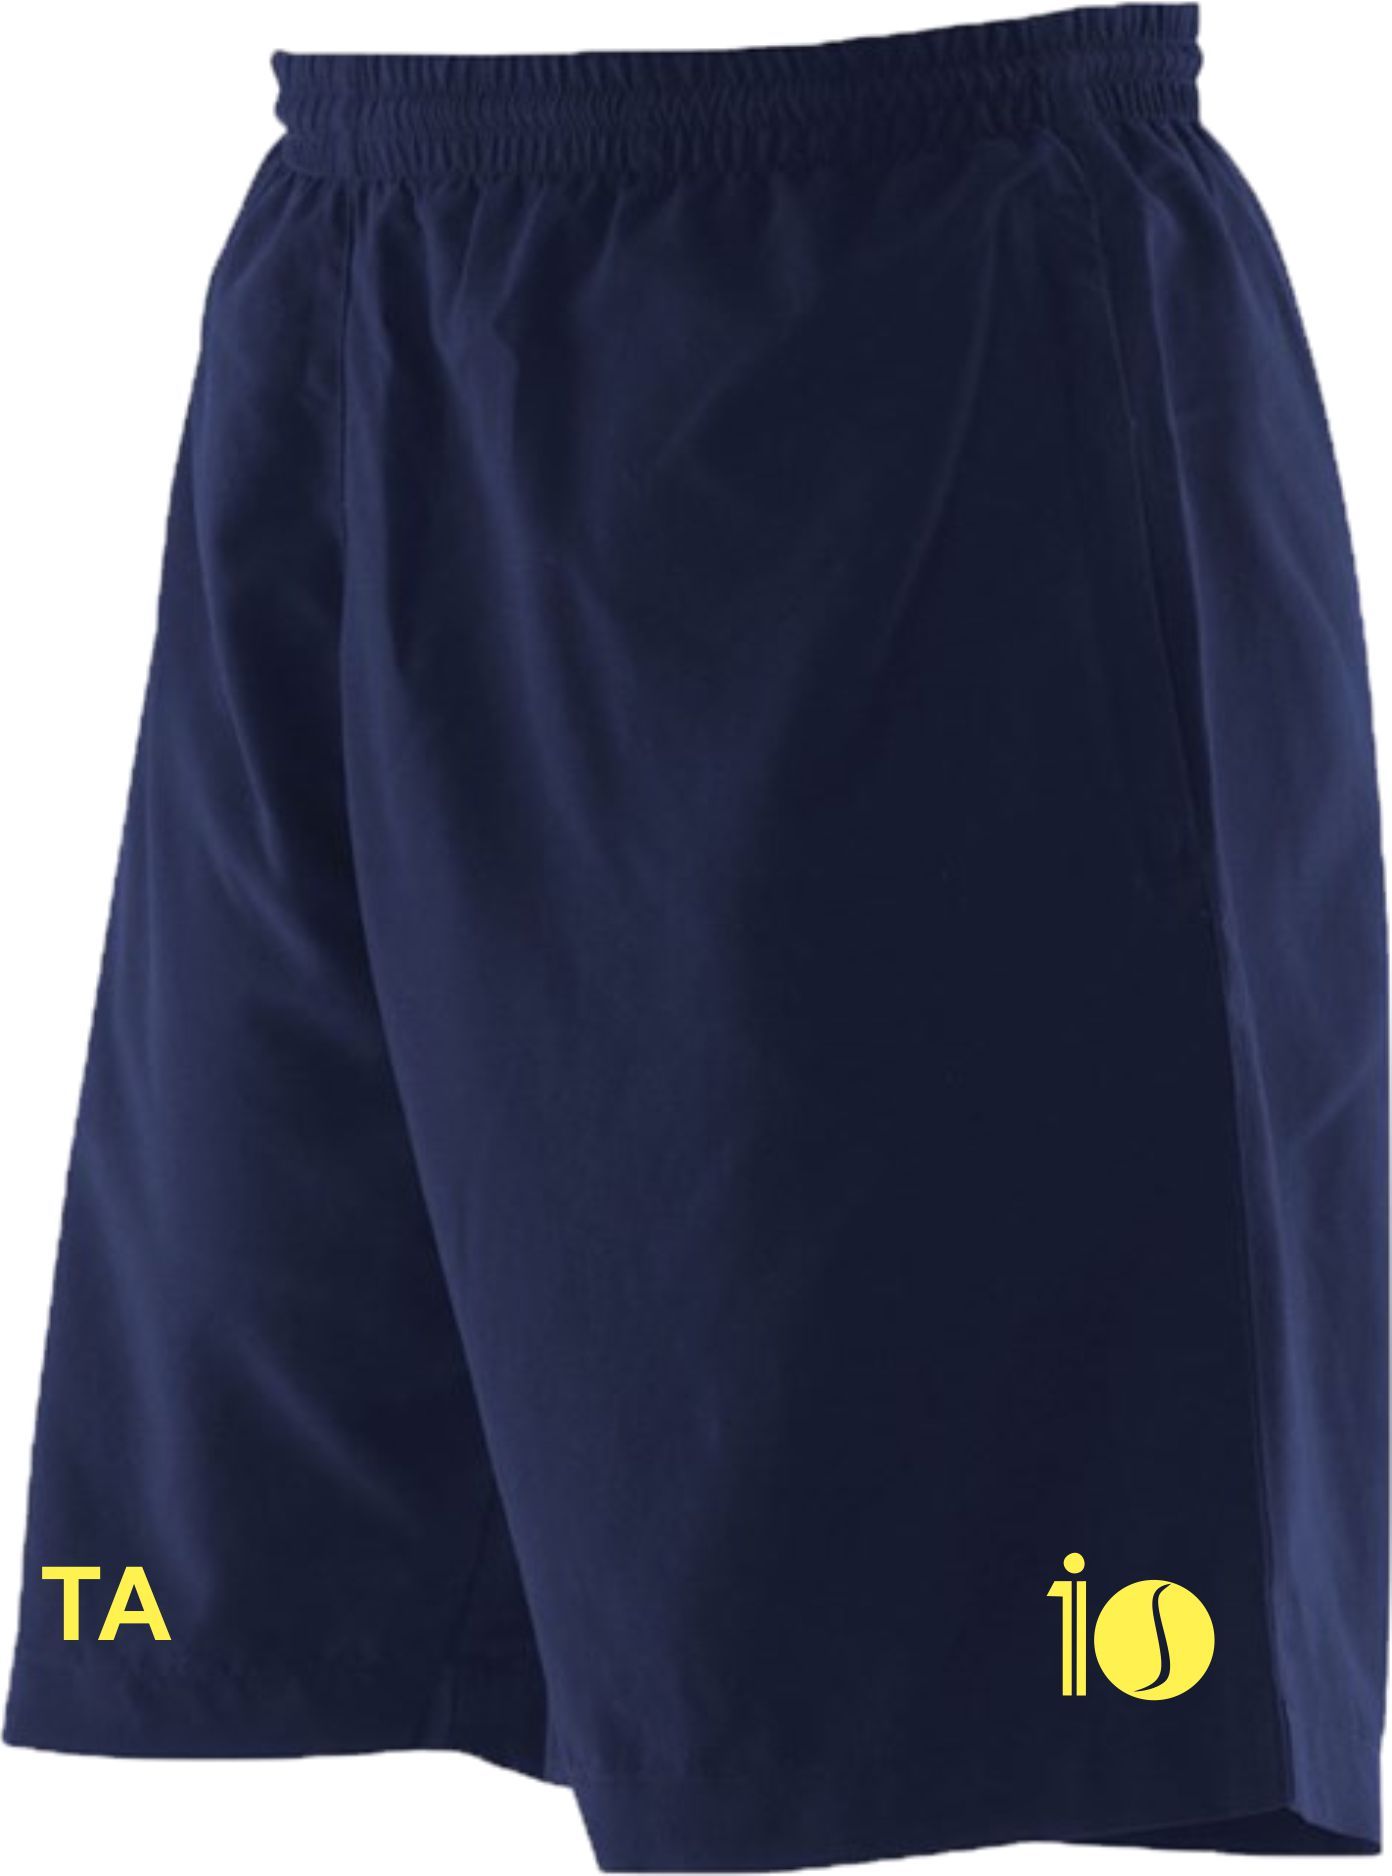 10is Academy Microfibre Shorts (Ladies)